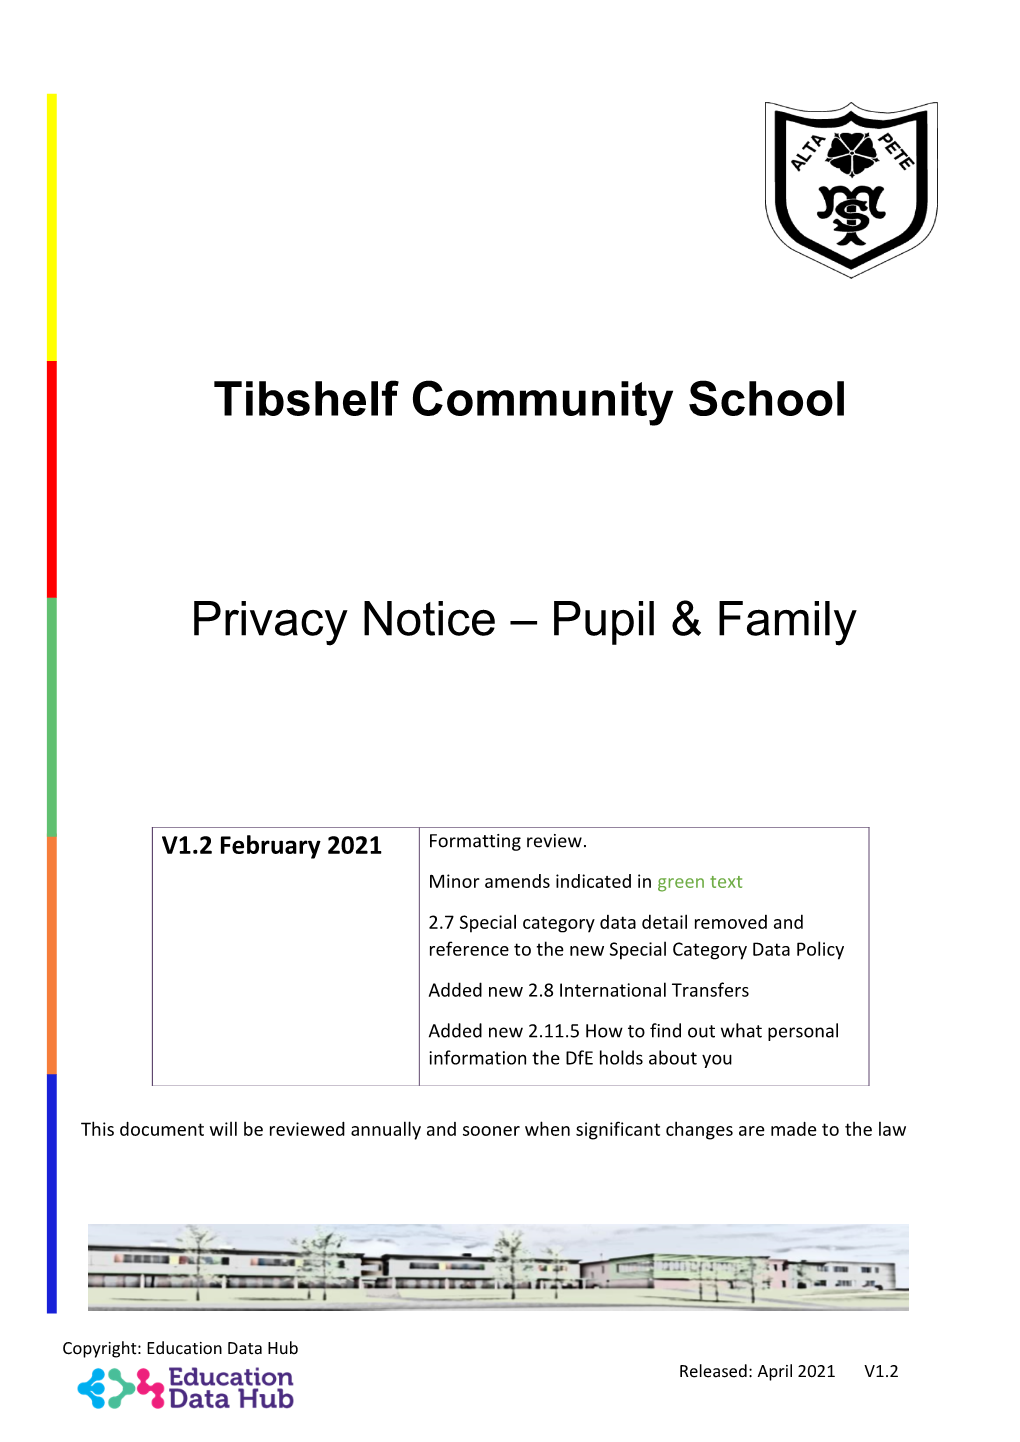 Tibshelf Community School Privacy Notice – Pupil & Family